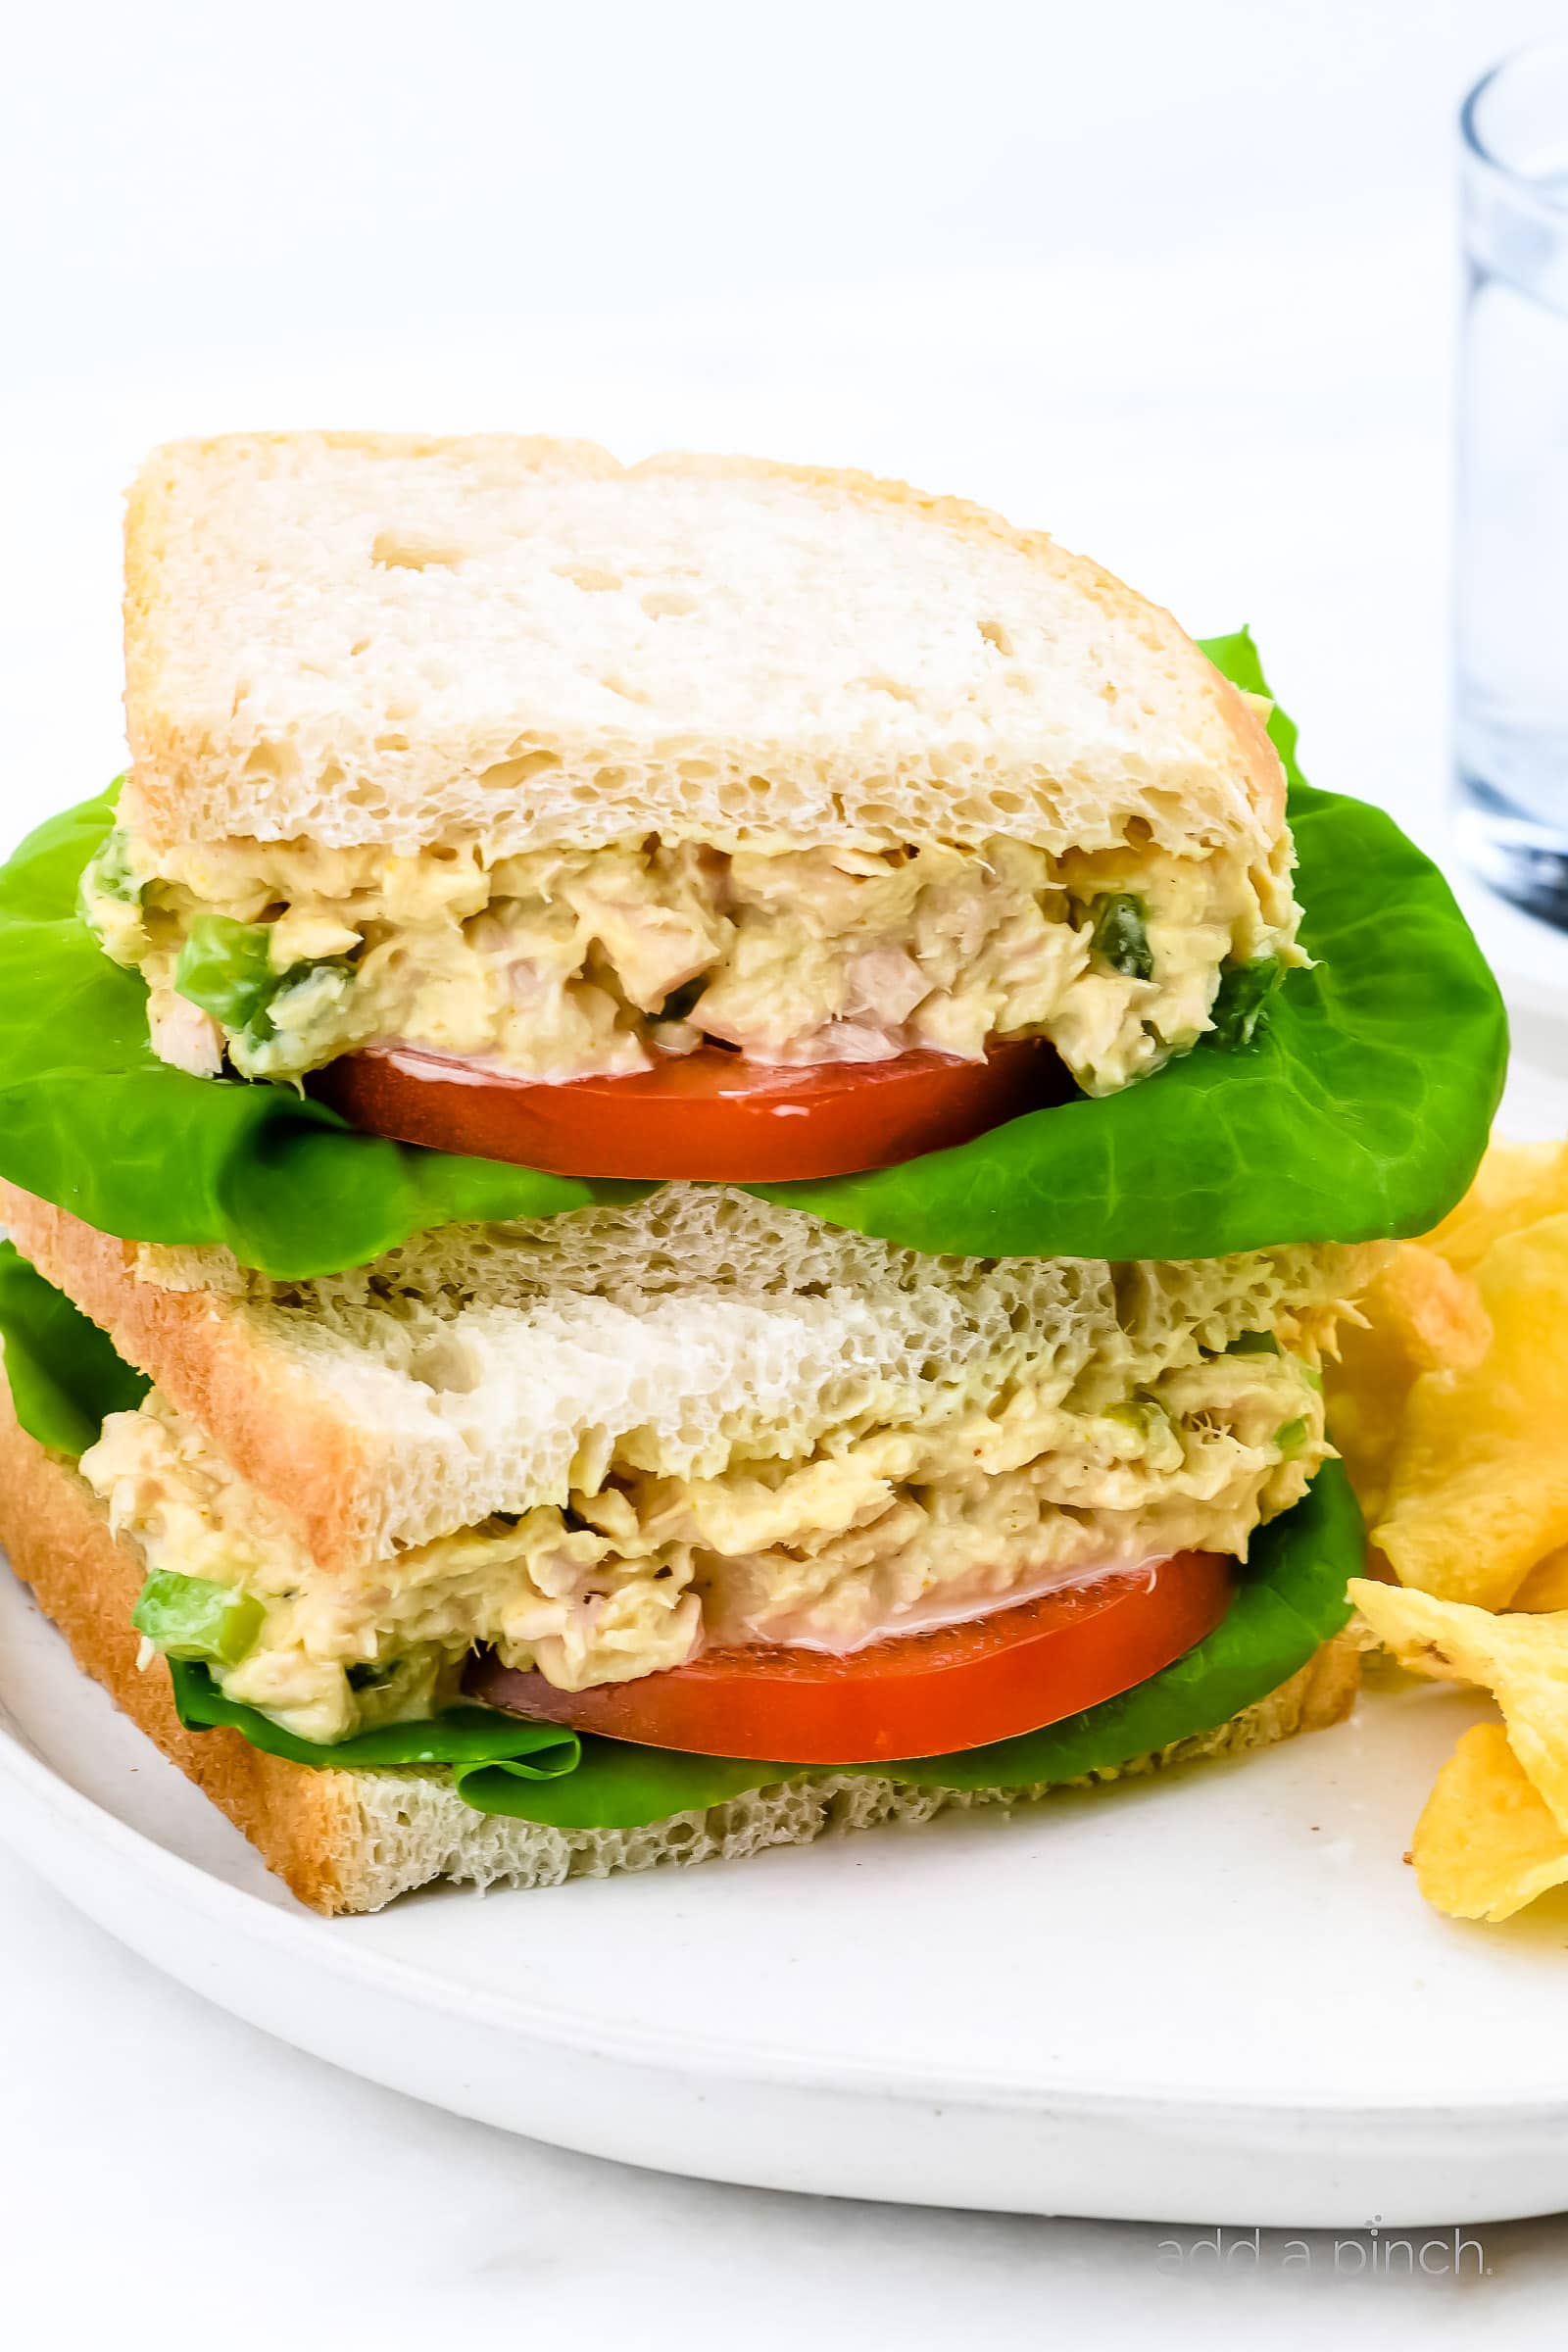 Tuna Salad Sandwich Best Tuna Salad Recipe How To Make A Tuna ...